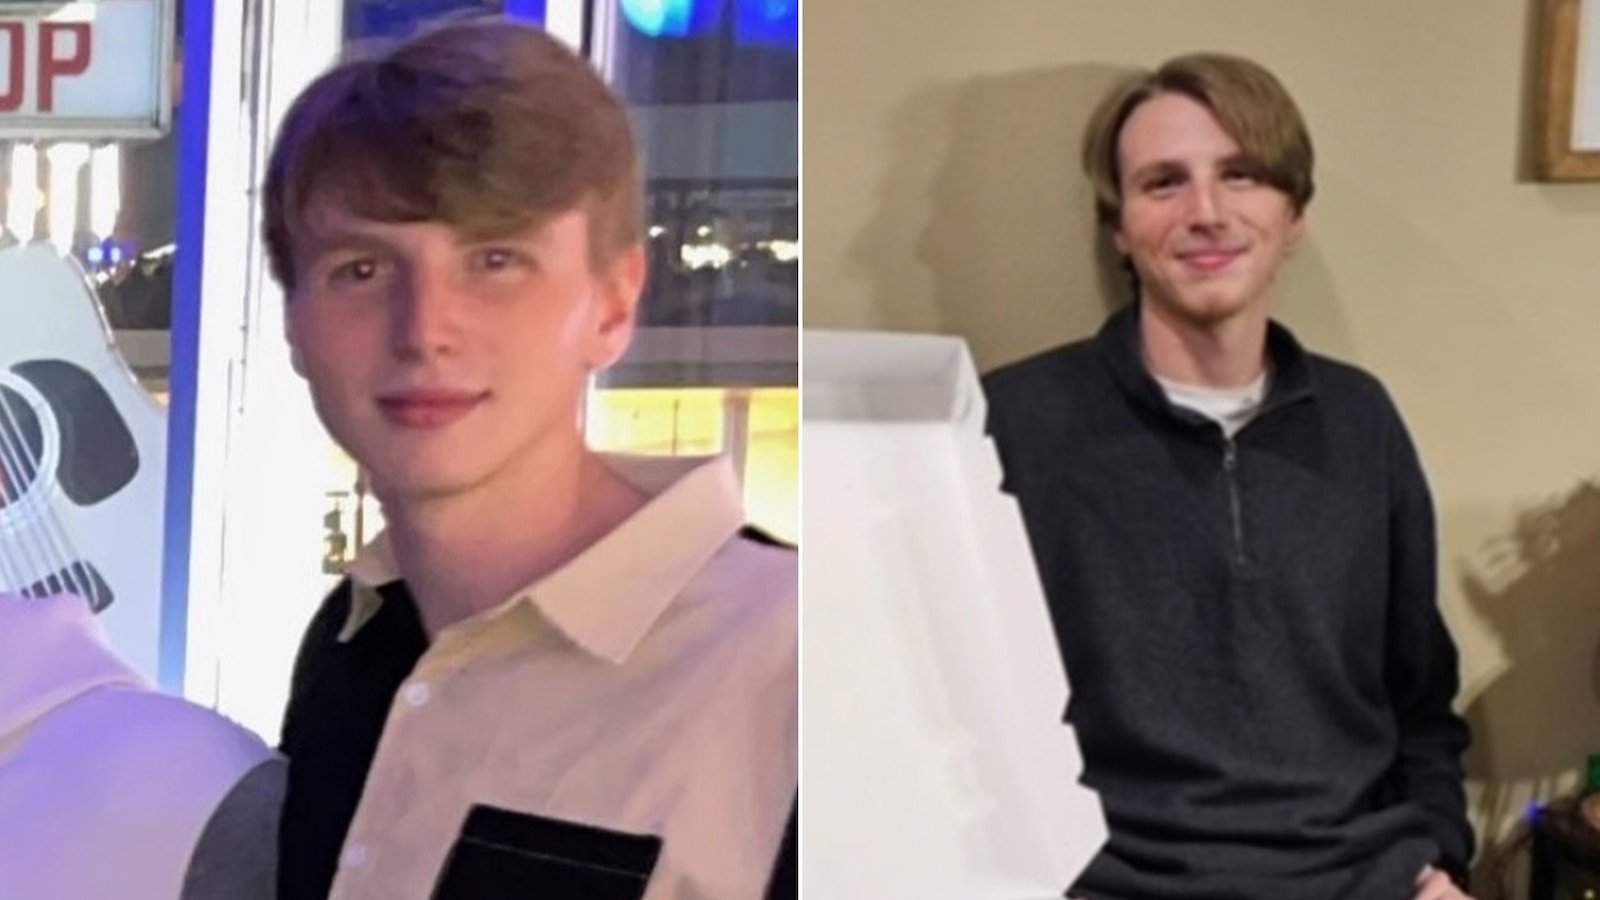 College student missing in Nashville, family desperate for information